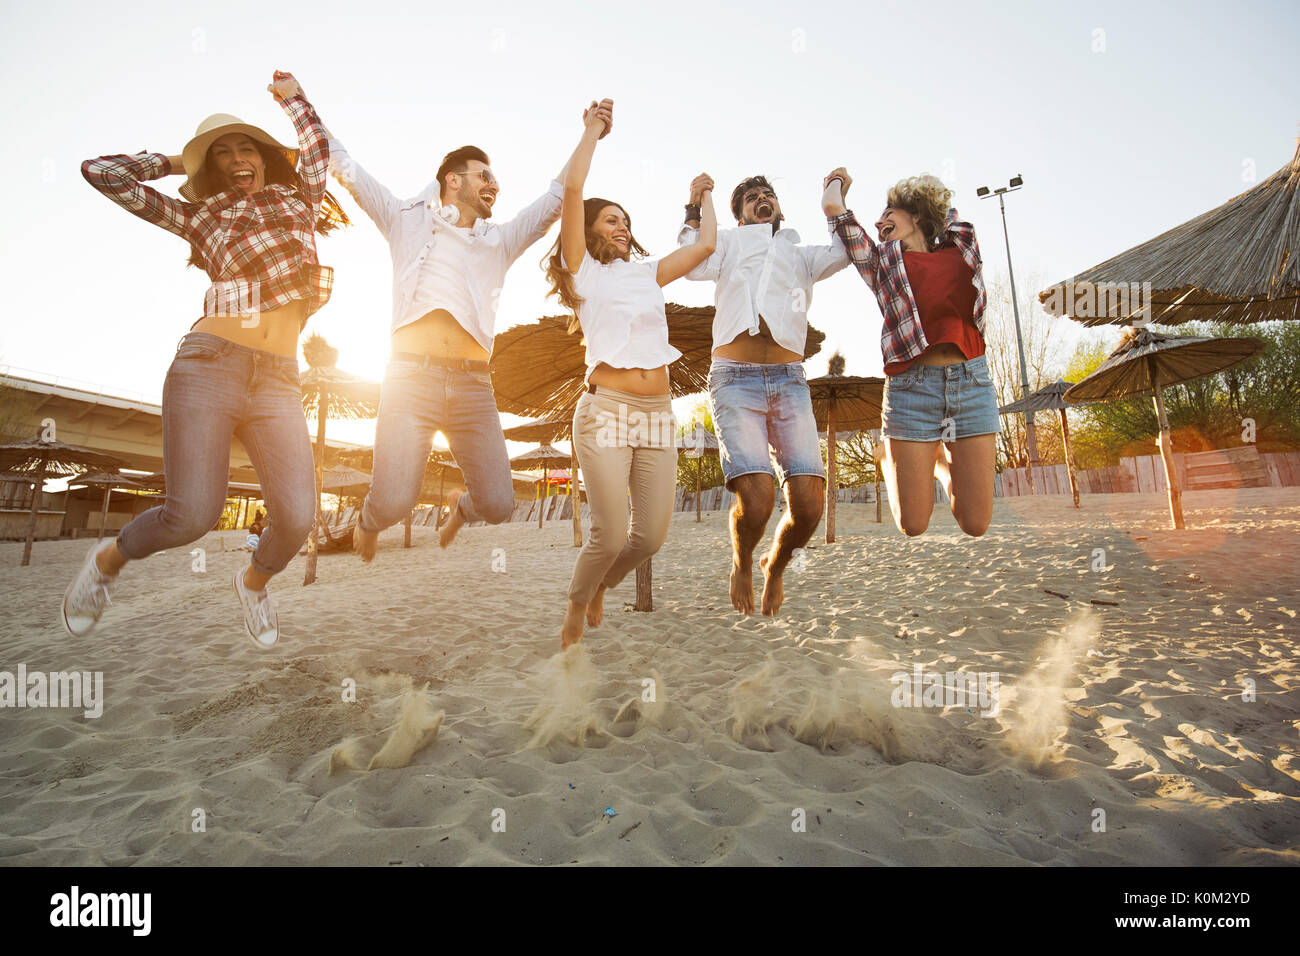 Group of friends on beach having fun Stock Photo